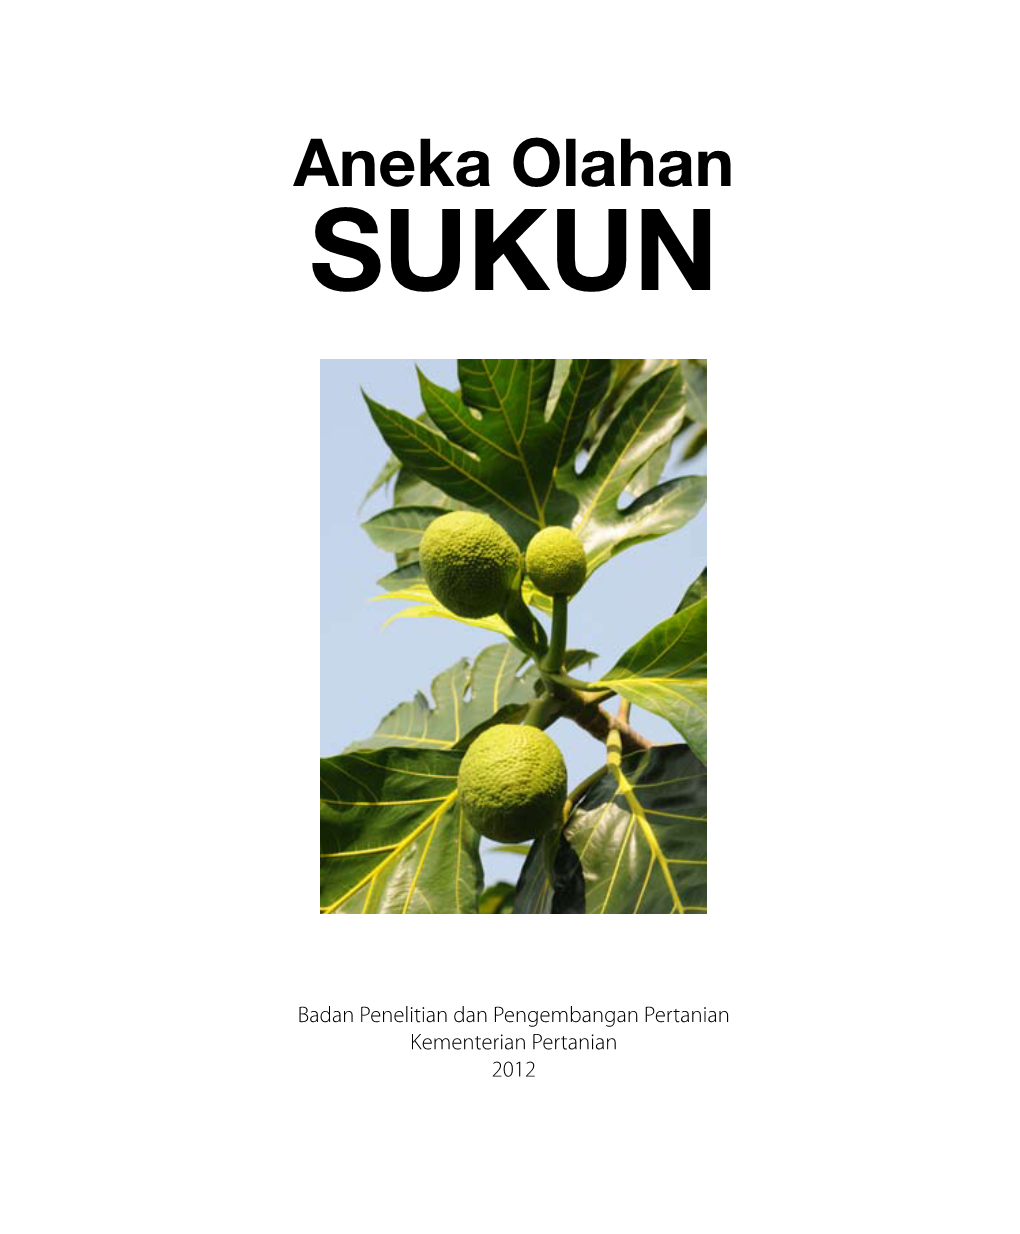 Aneka Olahan SUKUN